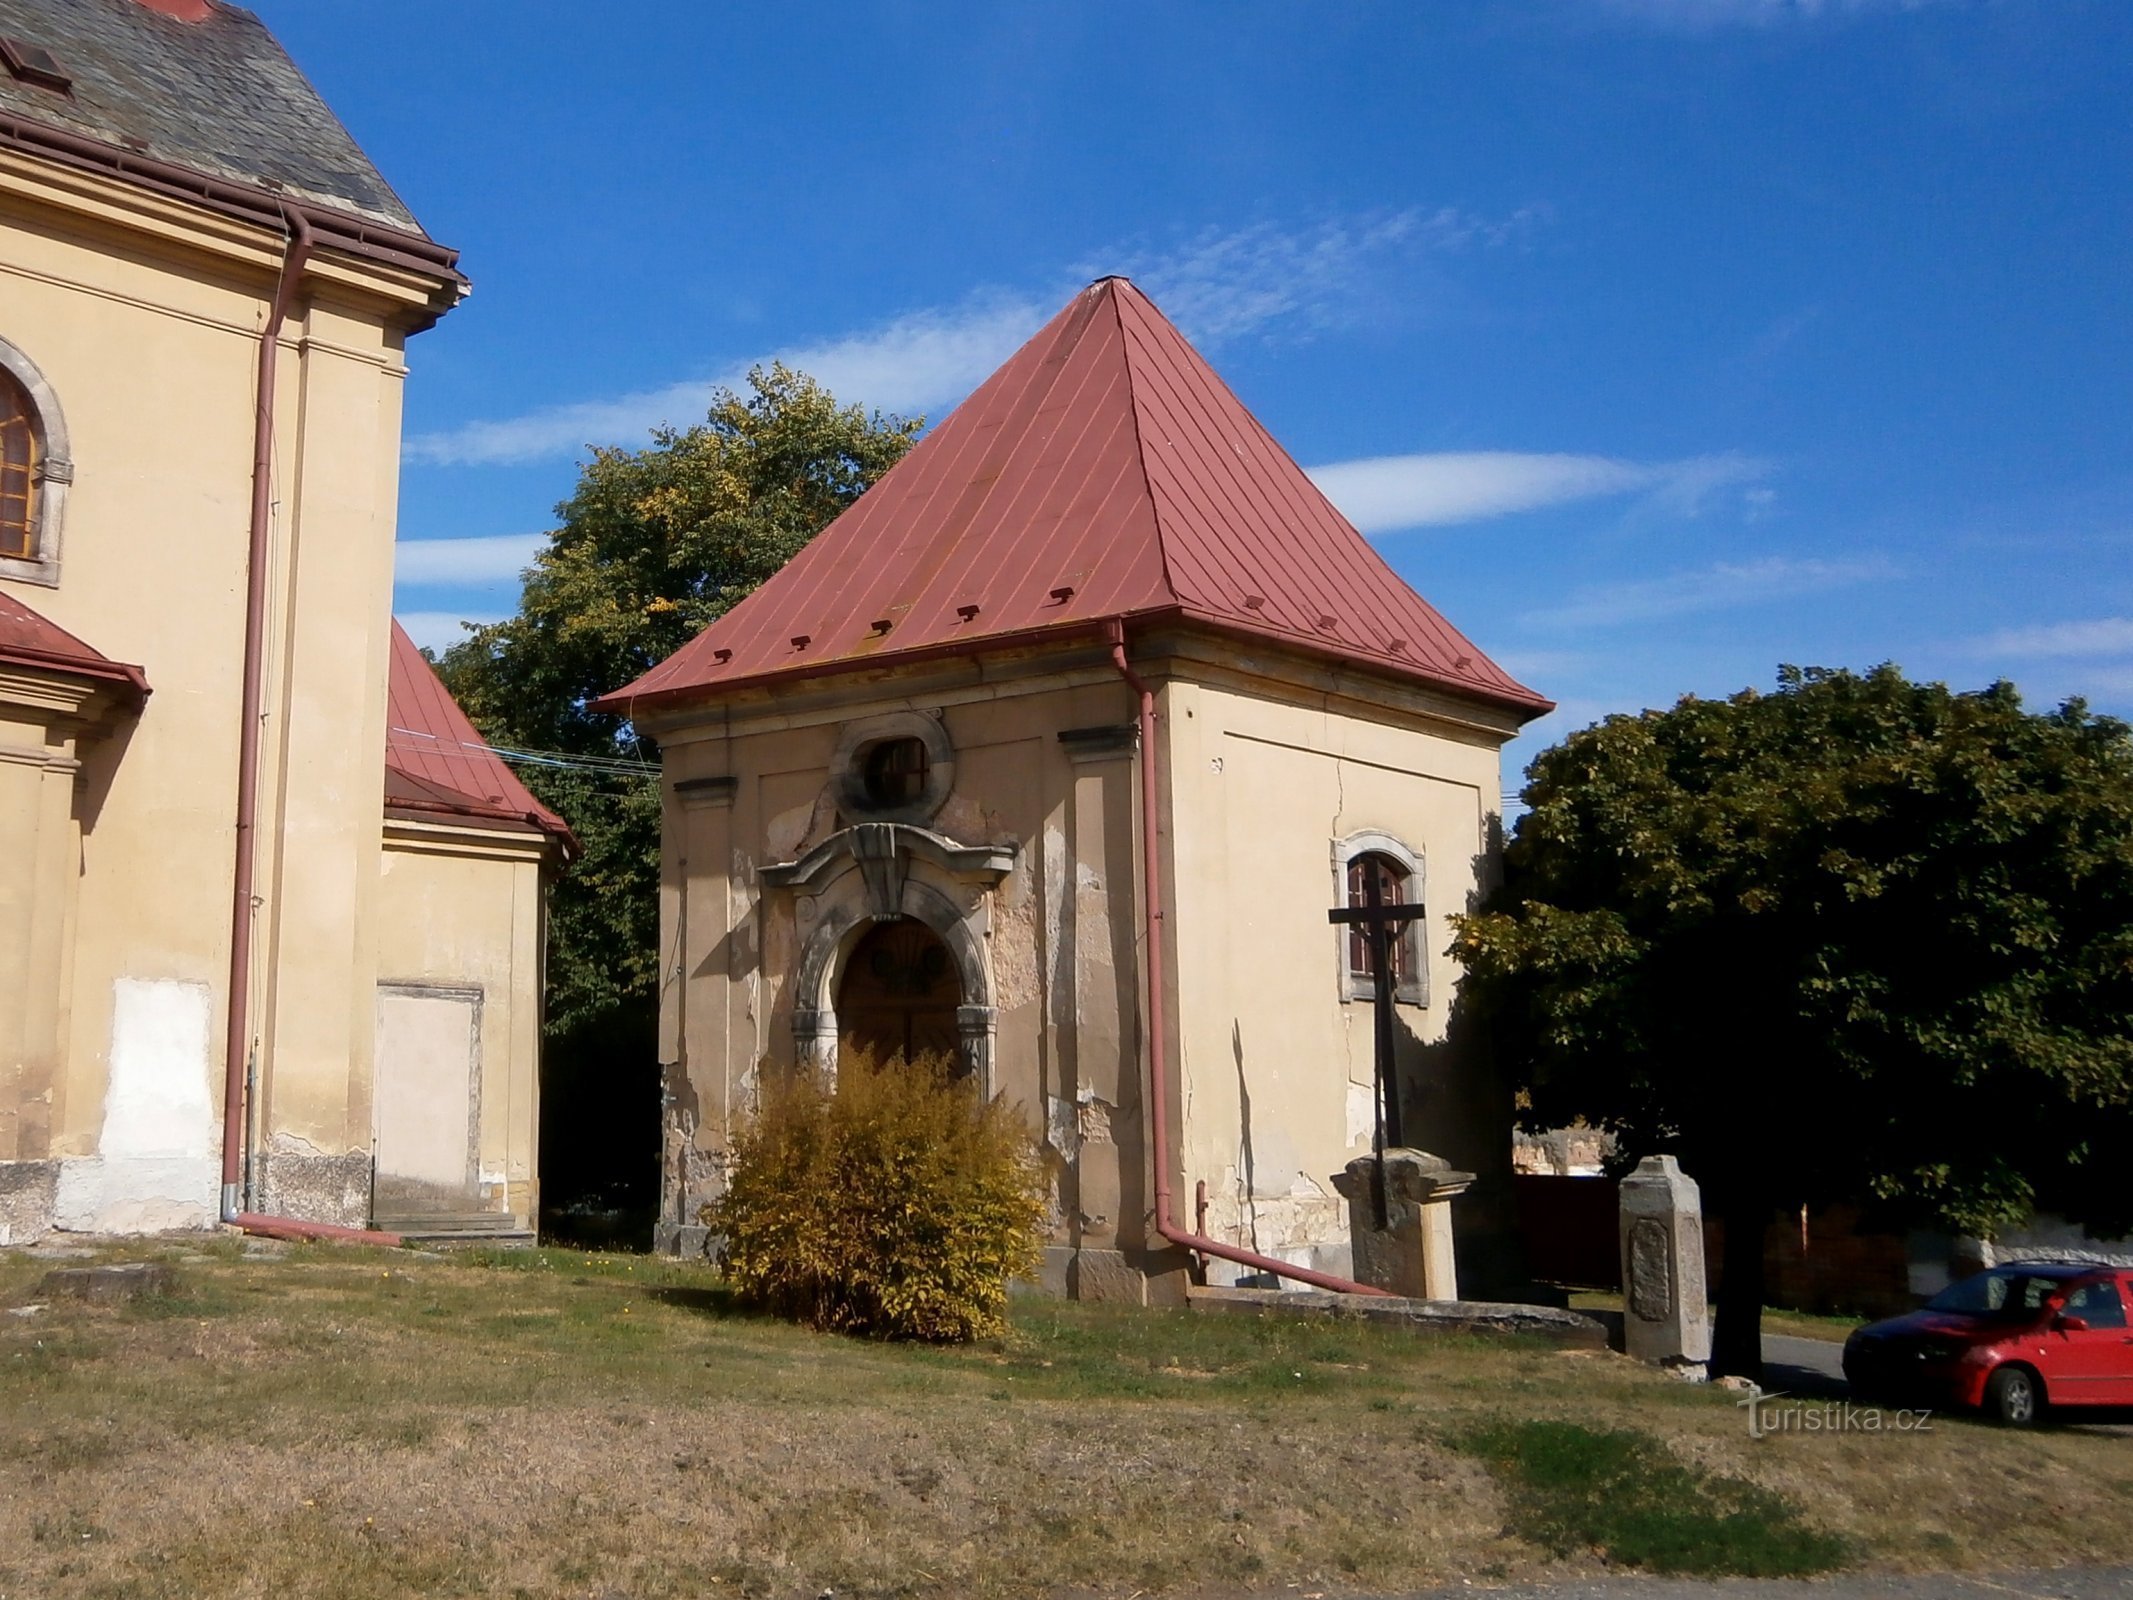 Chapelle de l'église St. Jiljí, abbé (Chvalkovice)